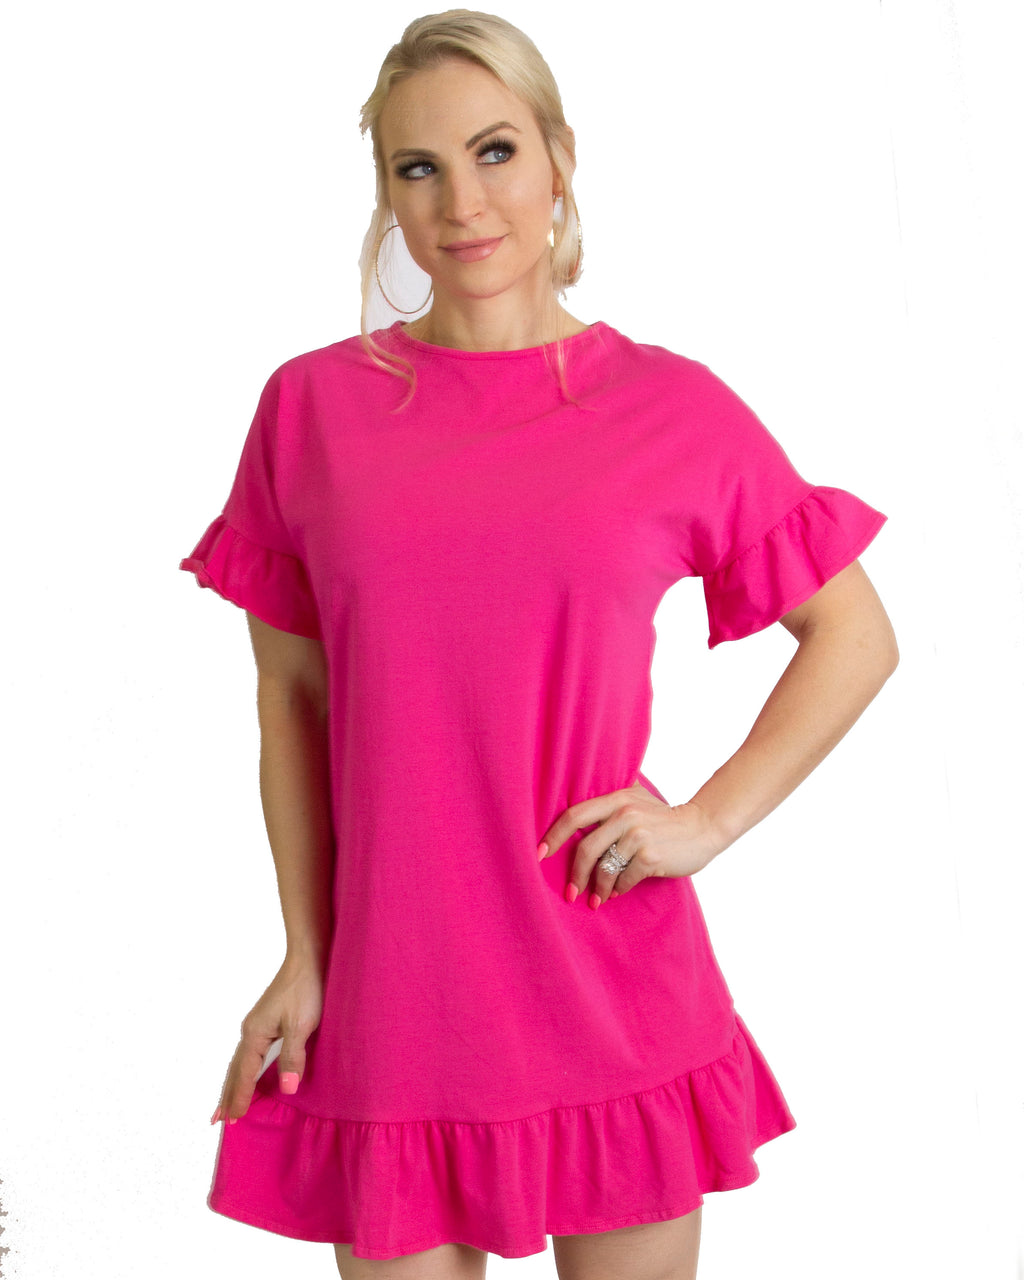 Bright pink t-shirt dress